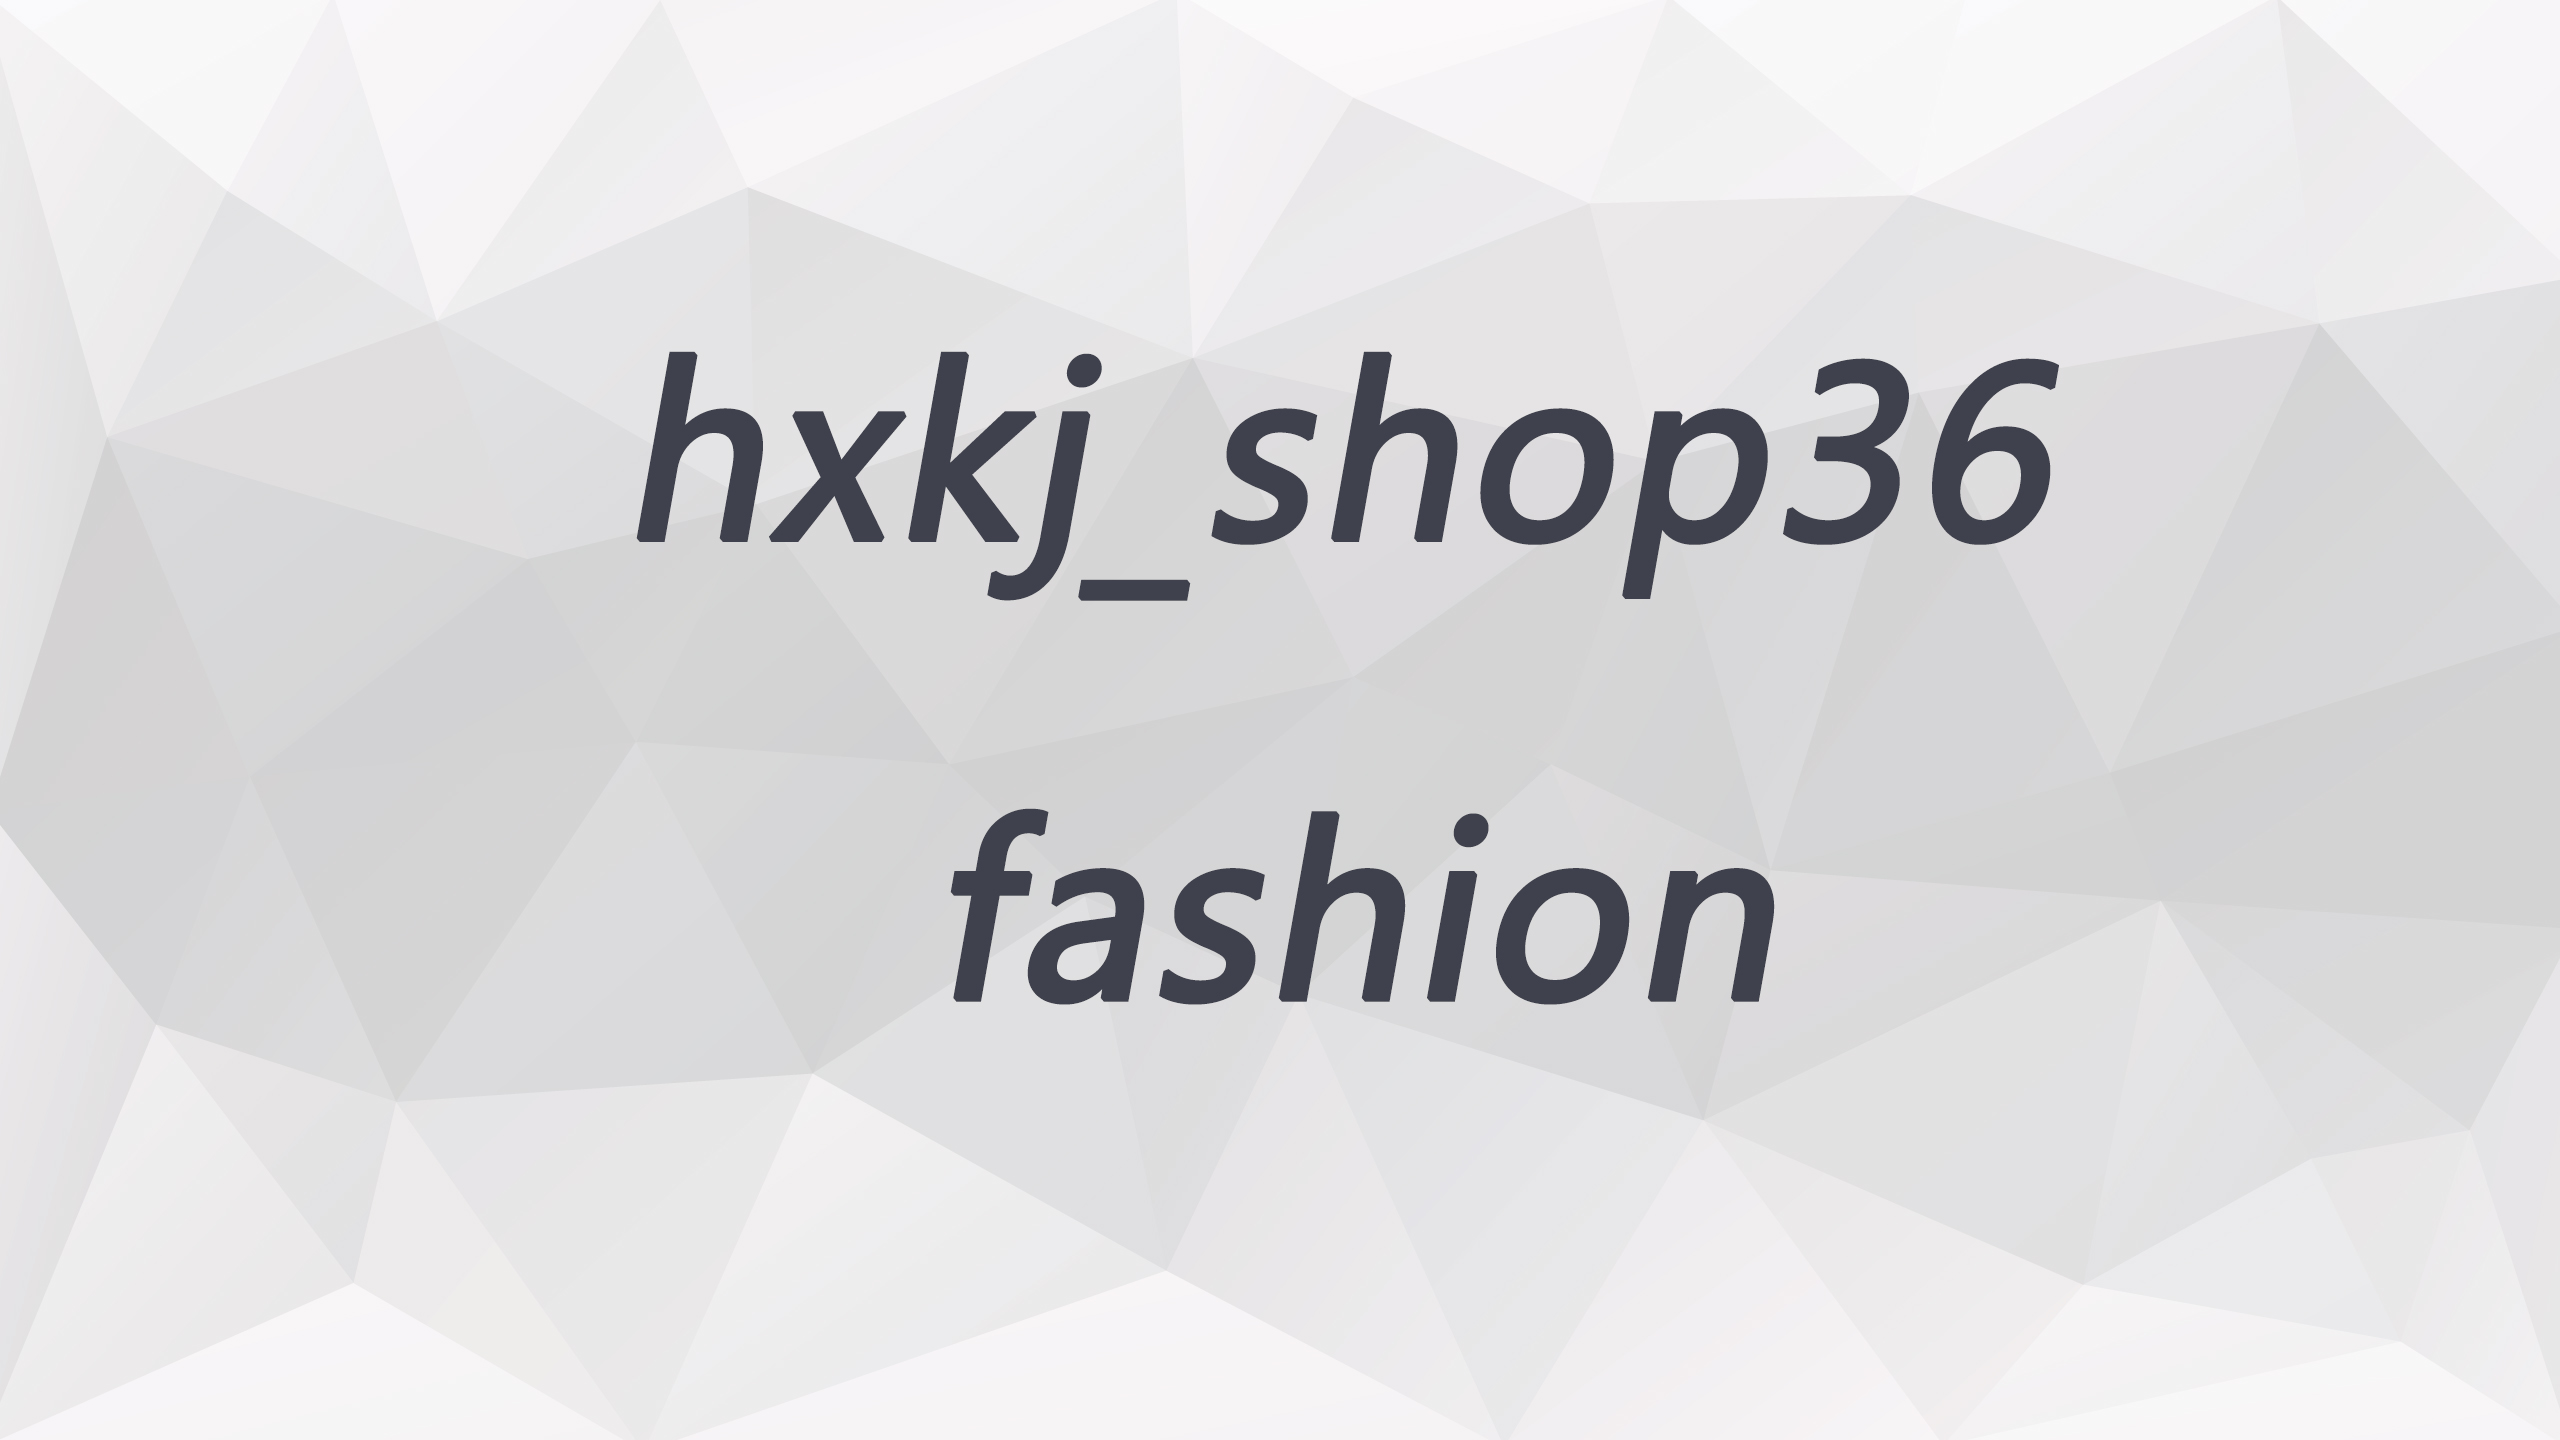 hxkj_shop36 store